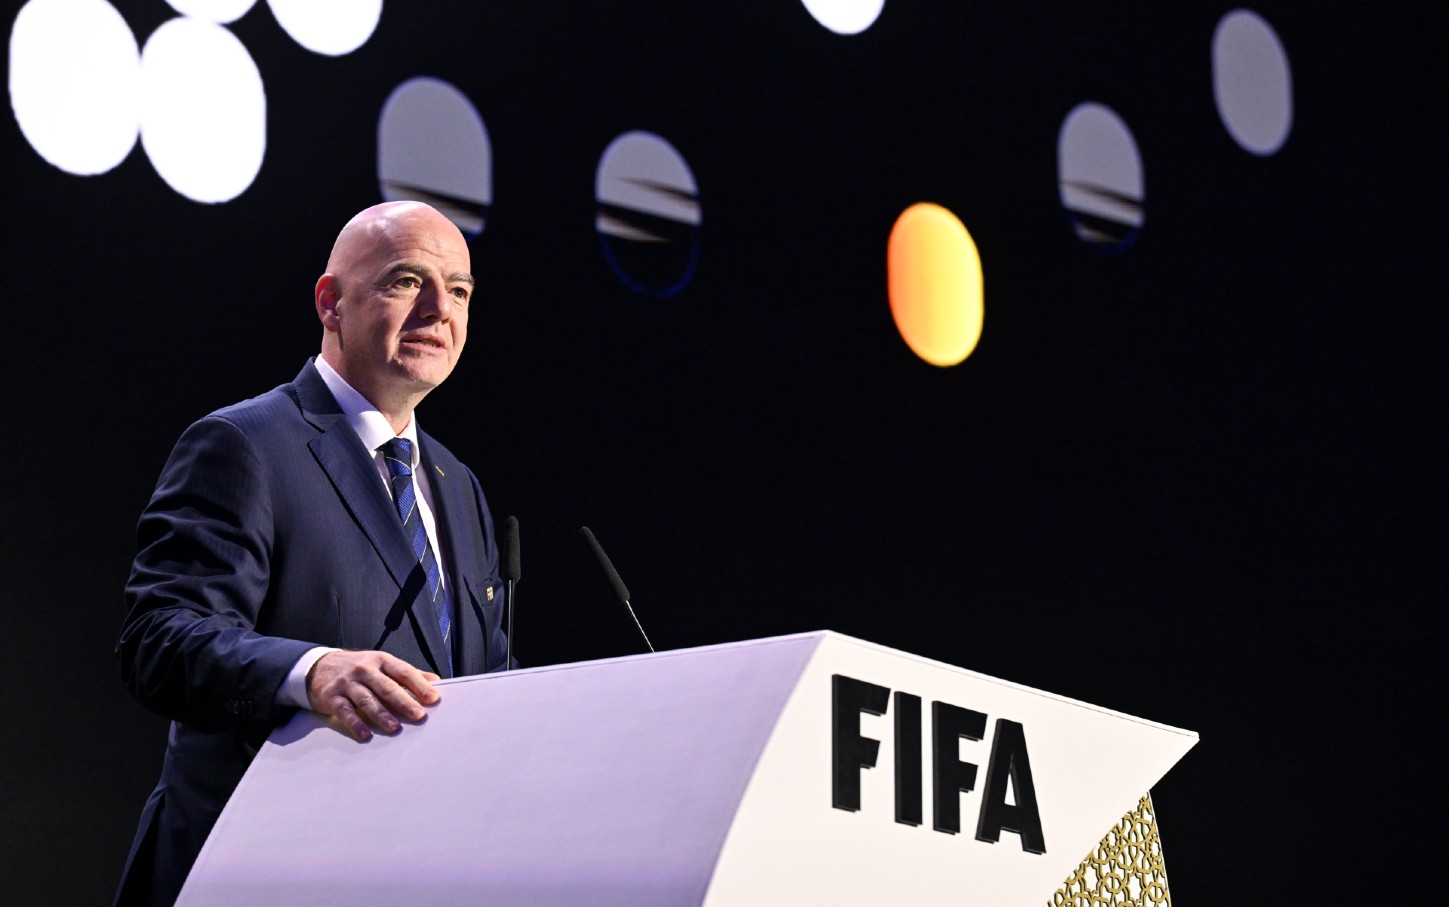 FIFA president Gianni Infantino at podium